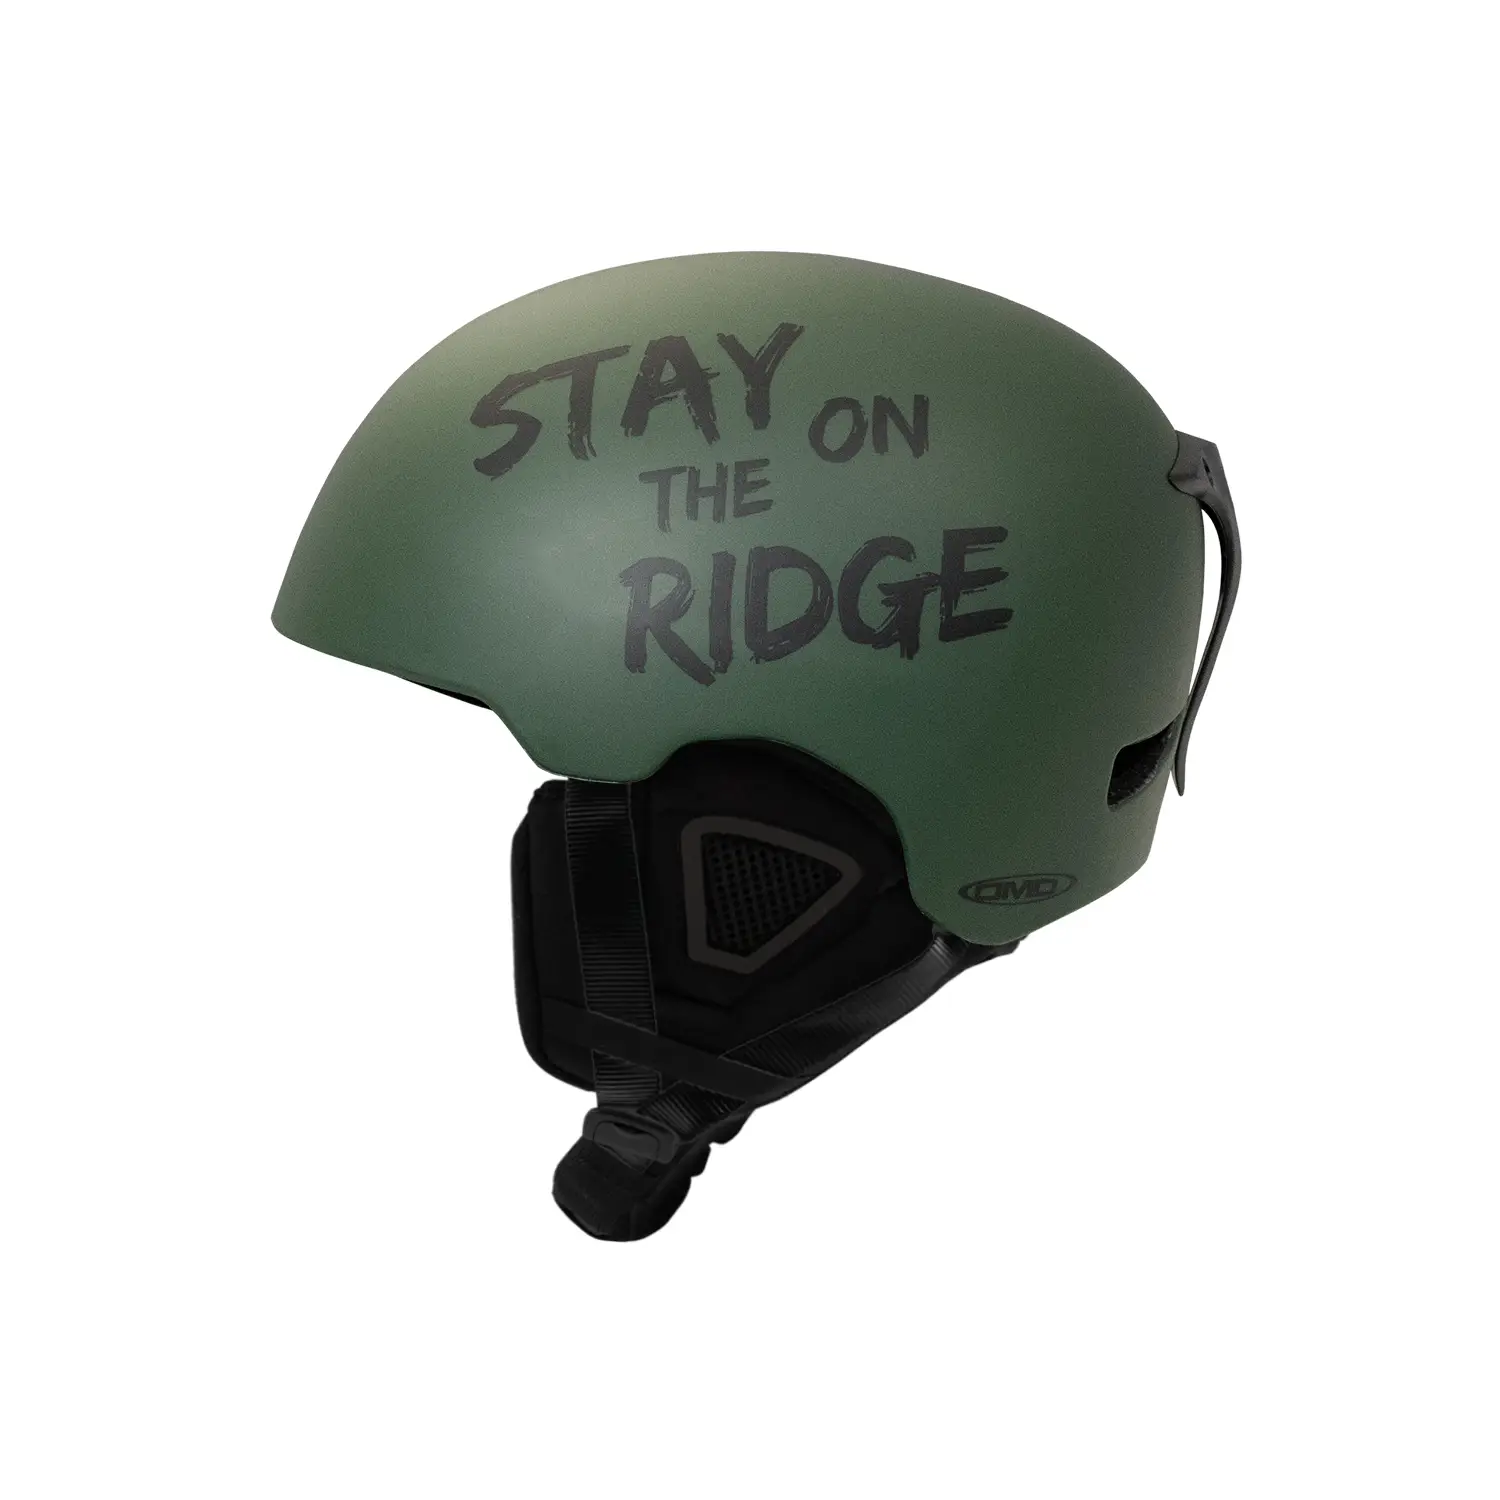 dmd.eu - RIDGE DMD – Ridge – sx